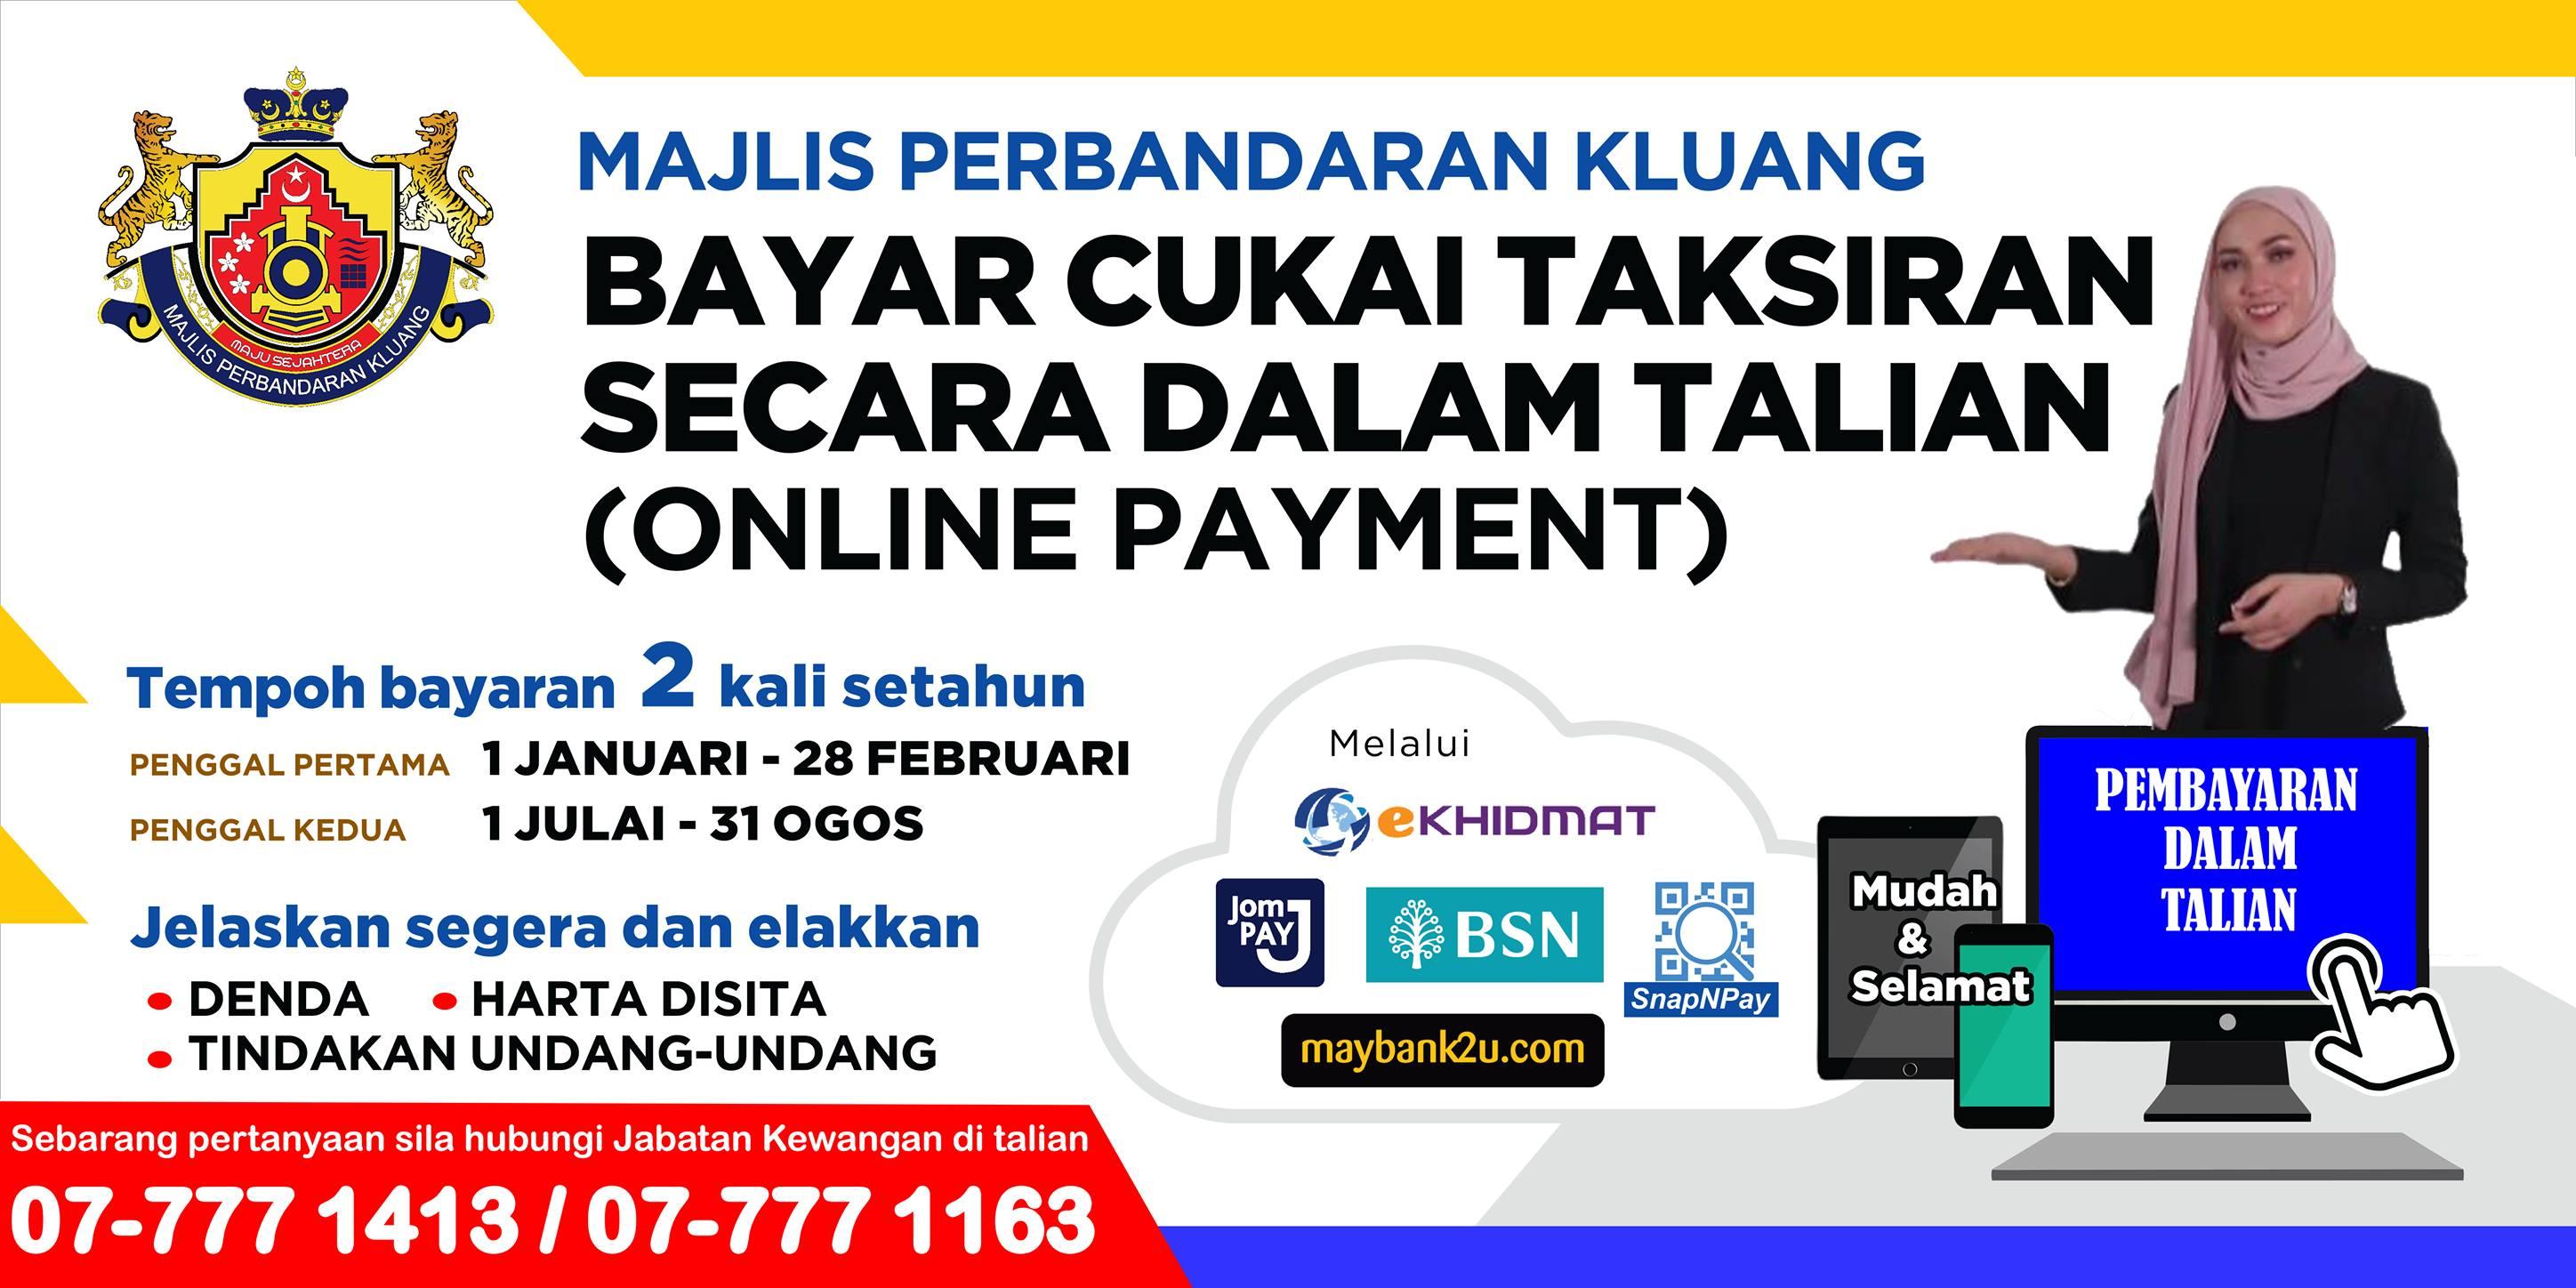 How To Pay Cukai Taksiran Online / Pay Mpsj Cukai Taksiran Online With